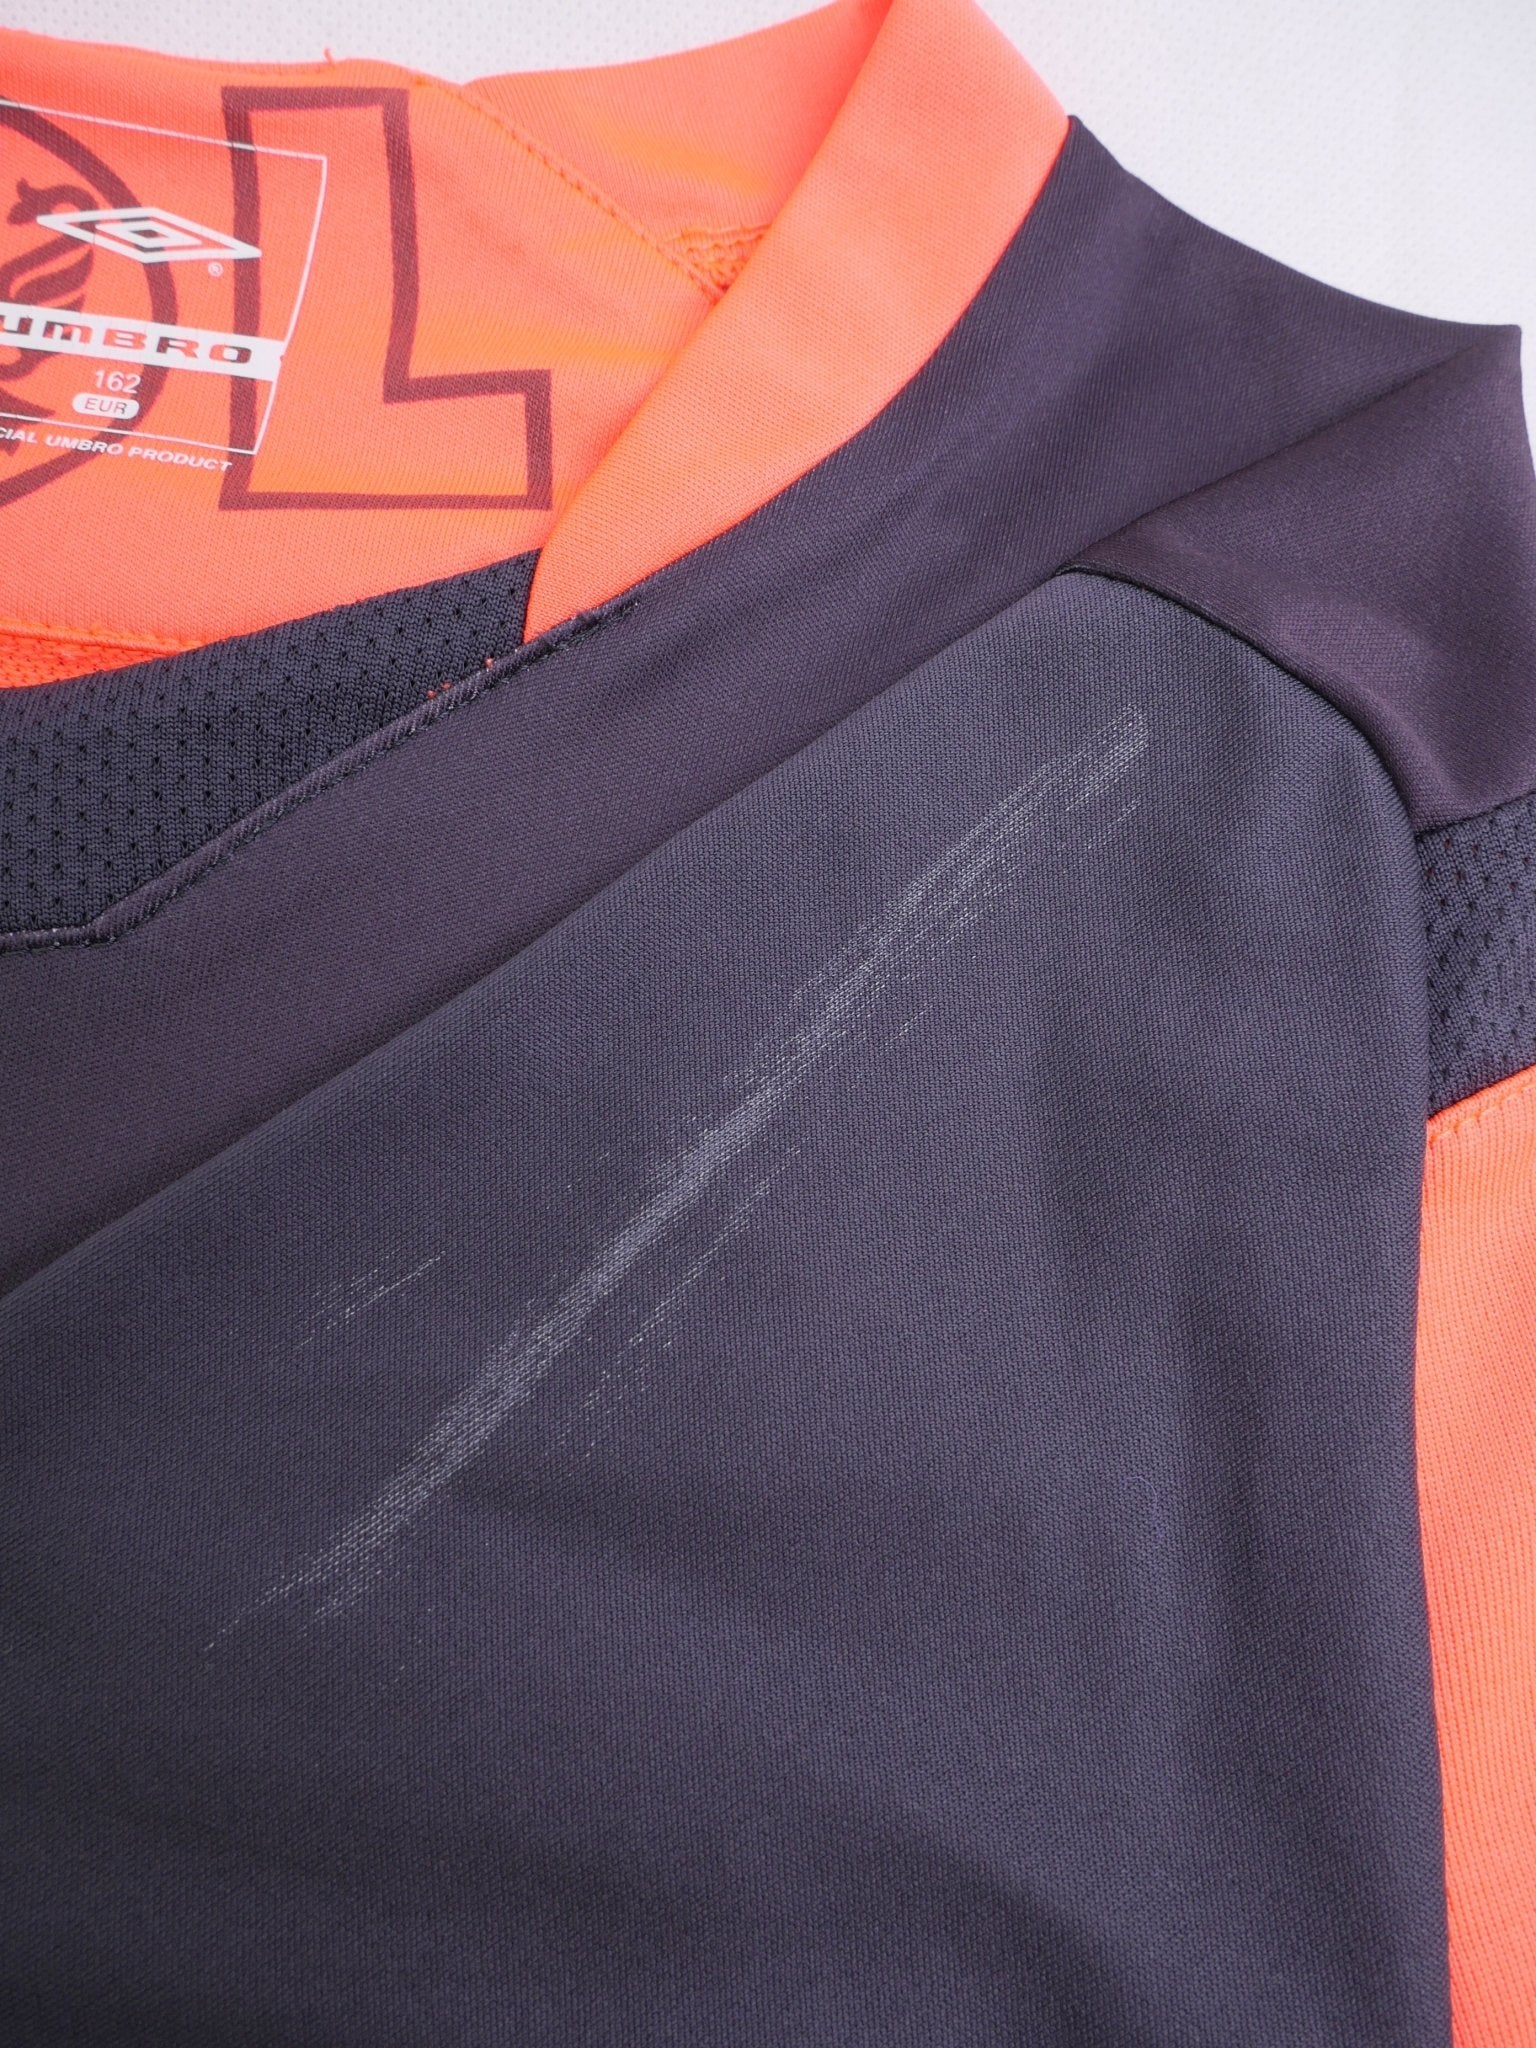 umbro embroidered Logo 'Olympic Lyon' Soccer Jersey Shirt - Peeces